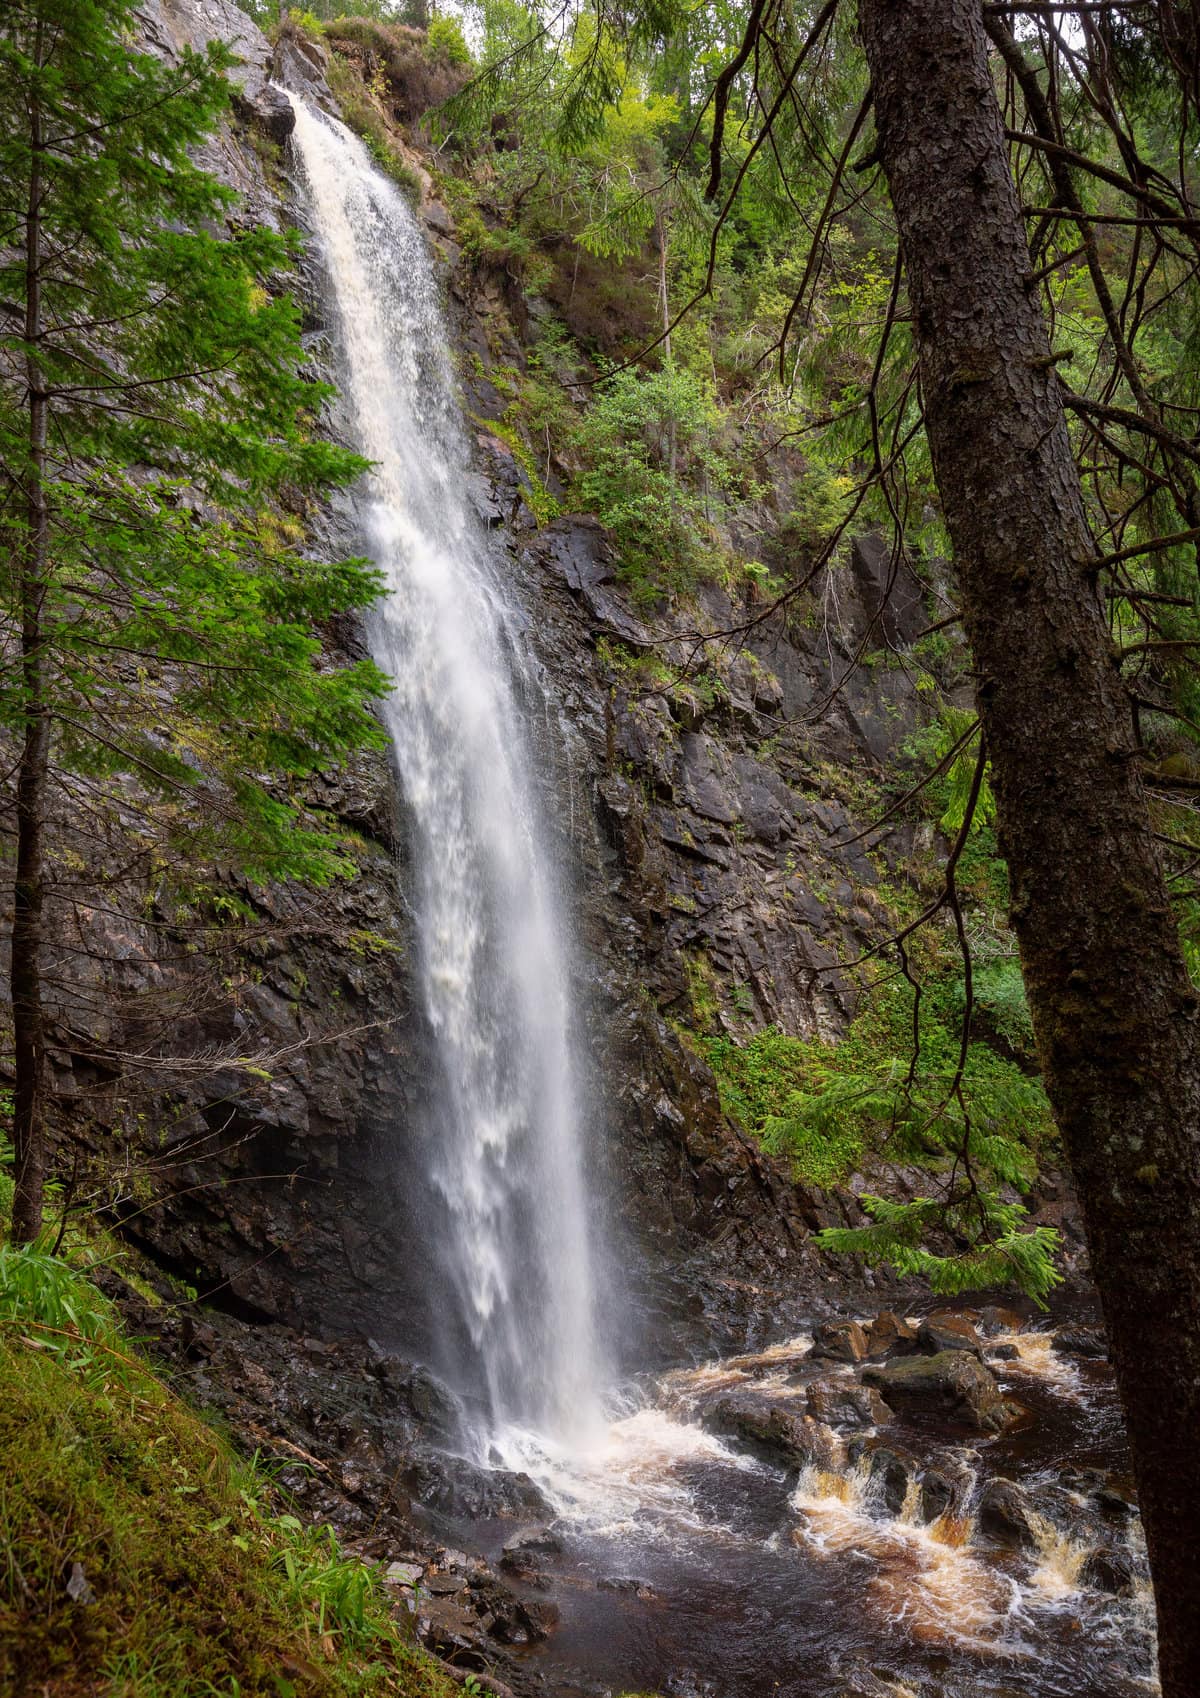 Plodda Falls in Tomich, near Glen Affric, Scotland